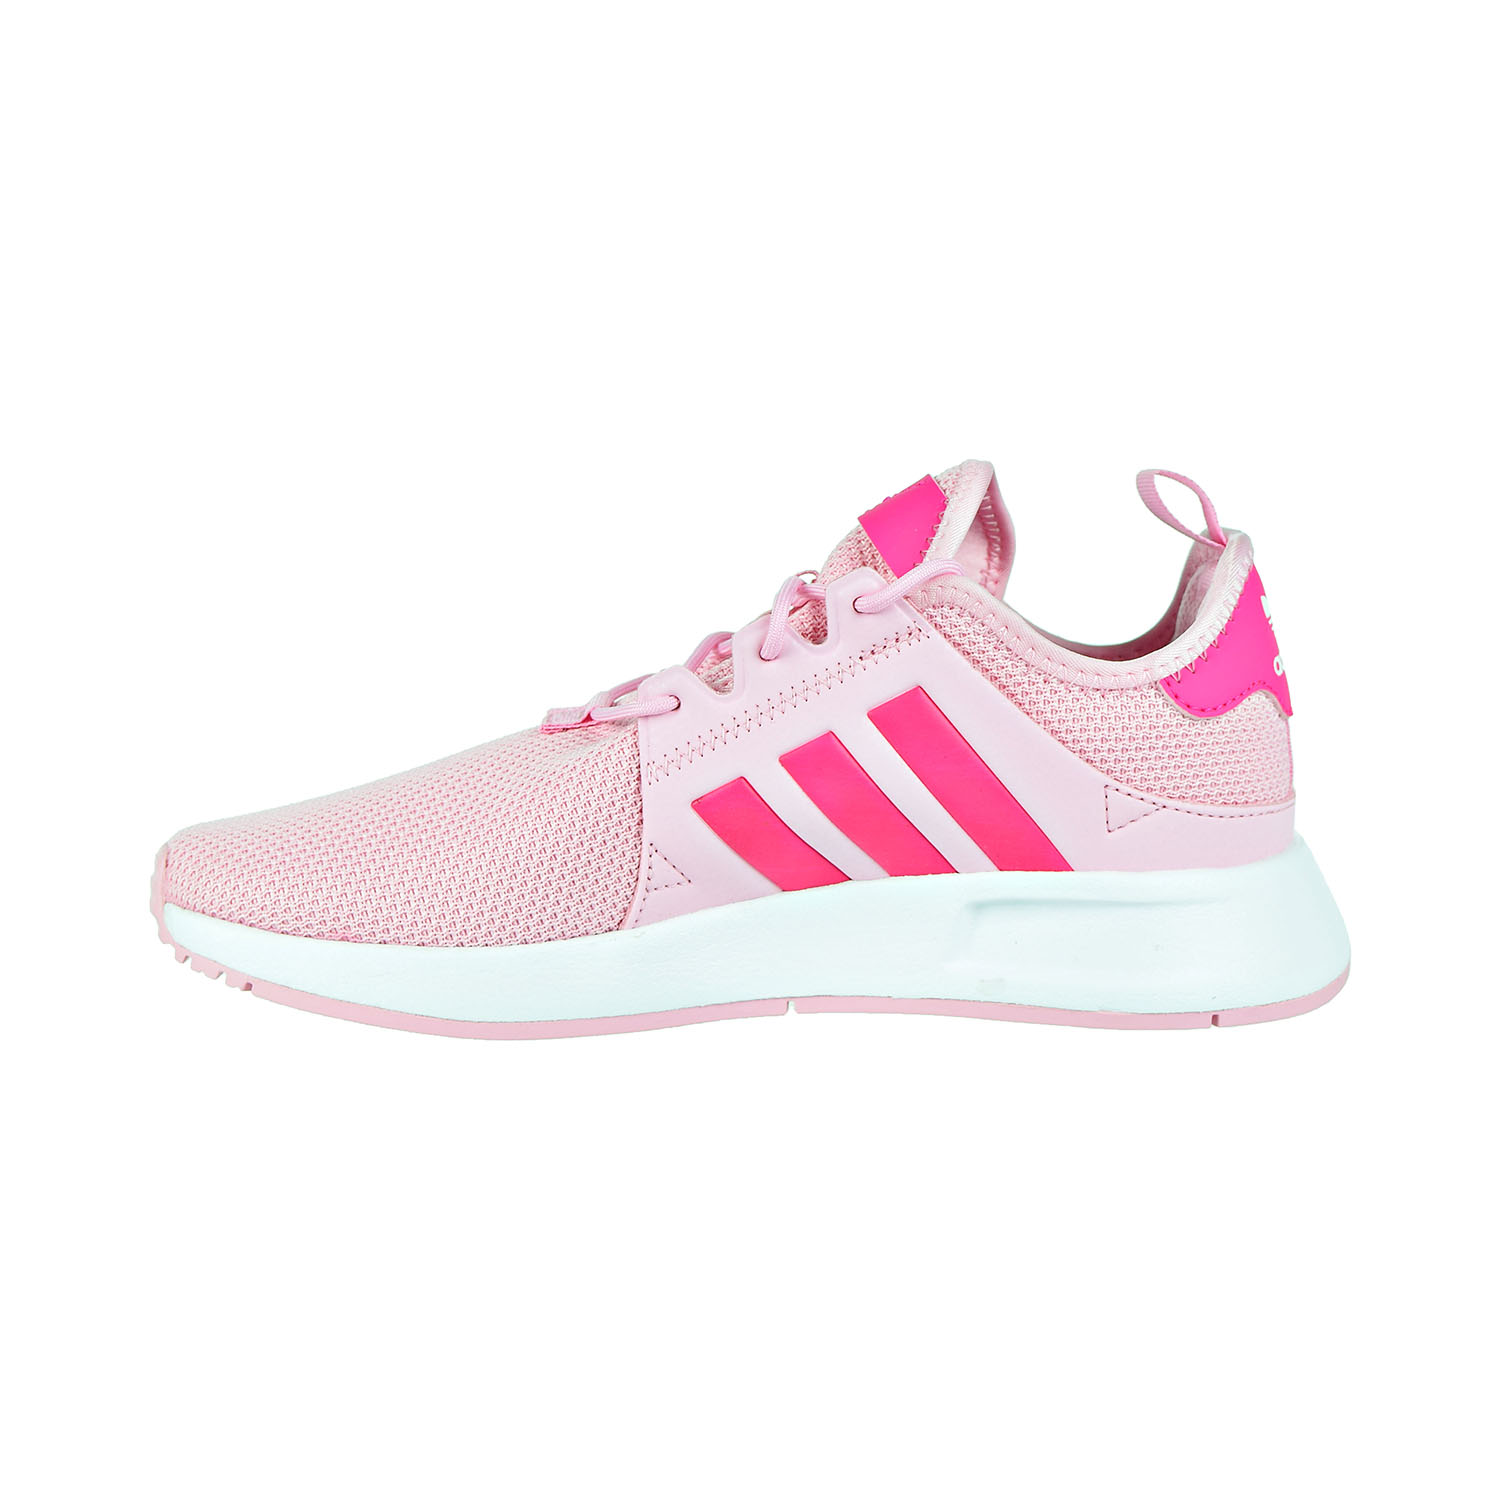 Adidas X_PLR Big Kids Shoes True Pink-Shock Pink G27281 | eBay